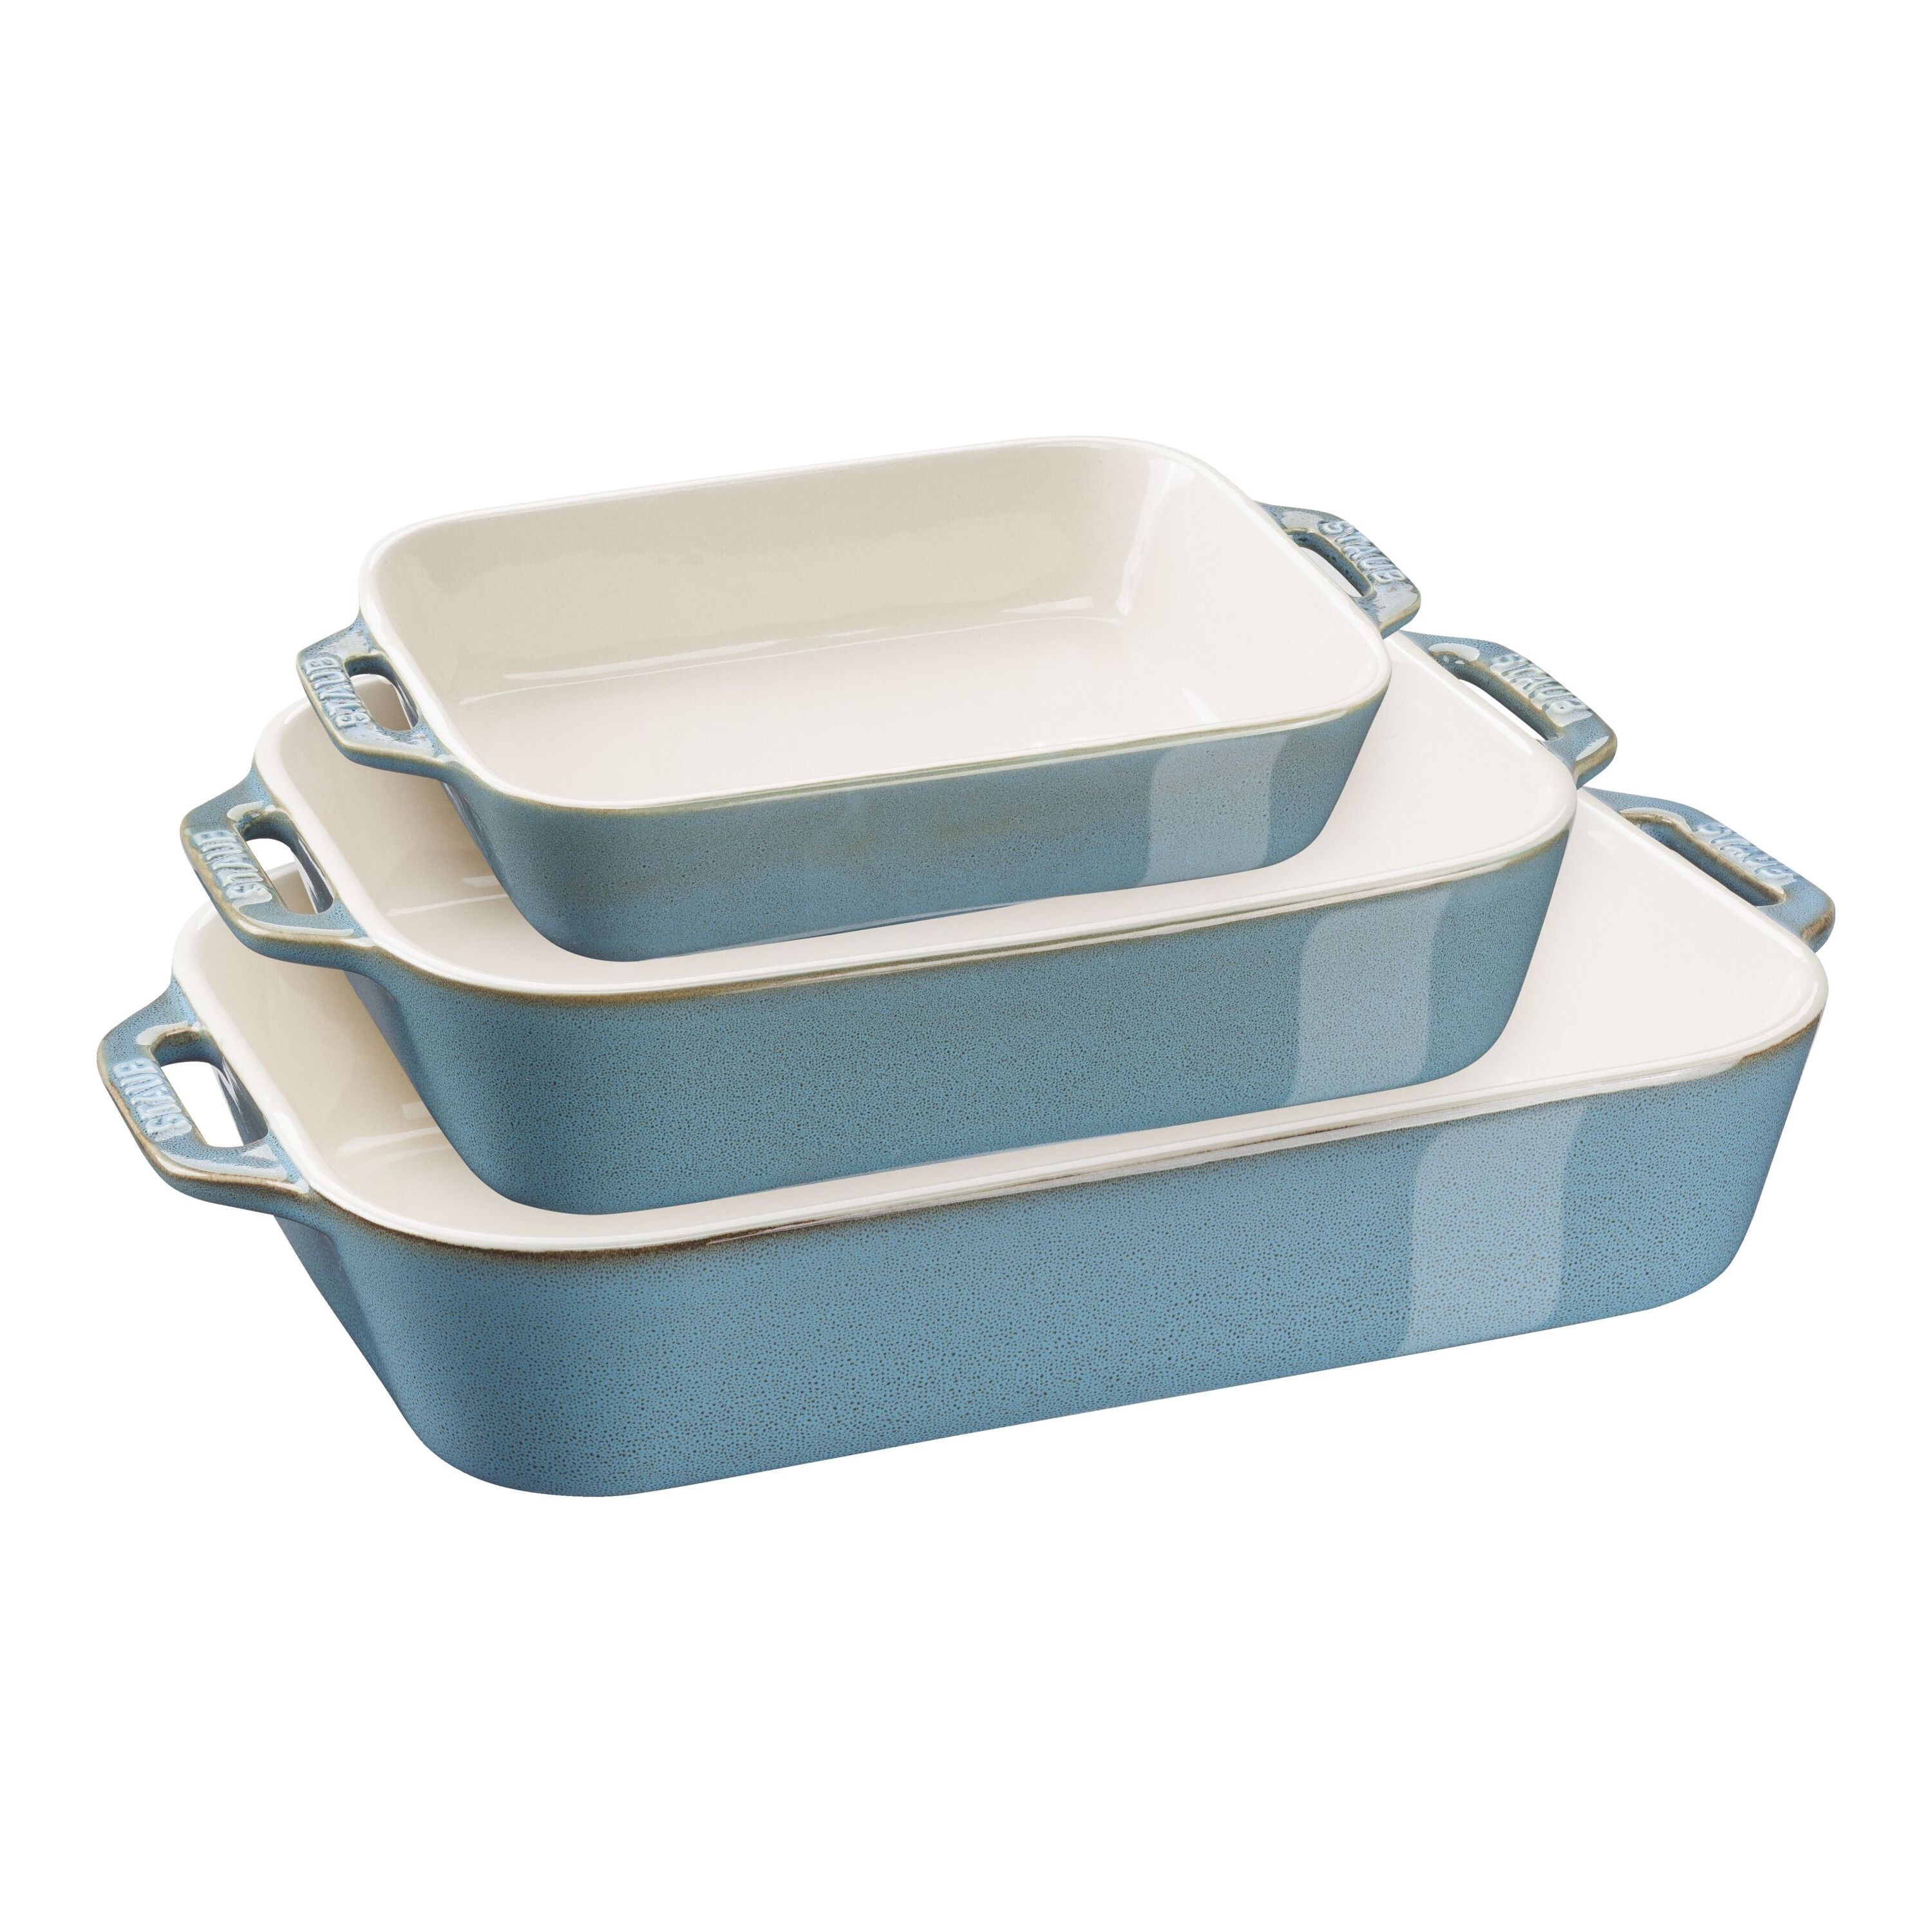 Crate & Barrel Slate Blue 9x13 Rectangular Cake Pan + Reviews